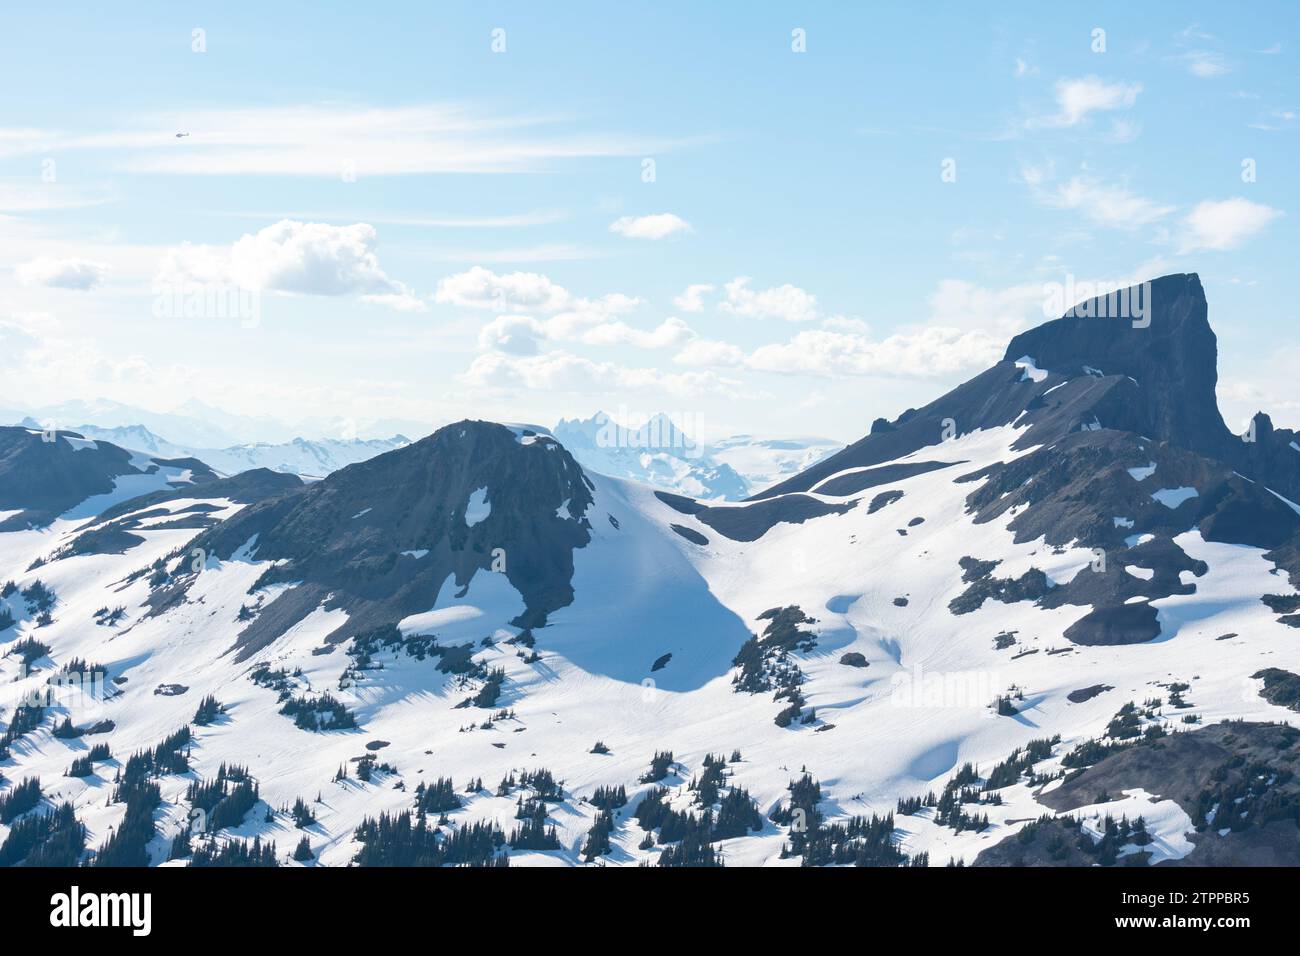 Black Tusk Mountain's dramatic peak rises above snowy alpine slopes. Stock Photo